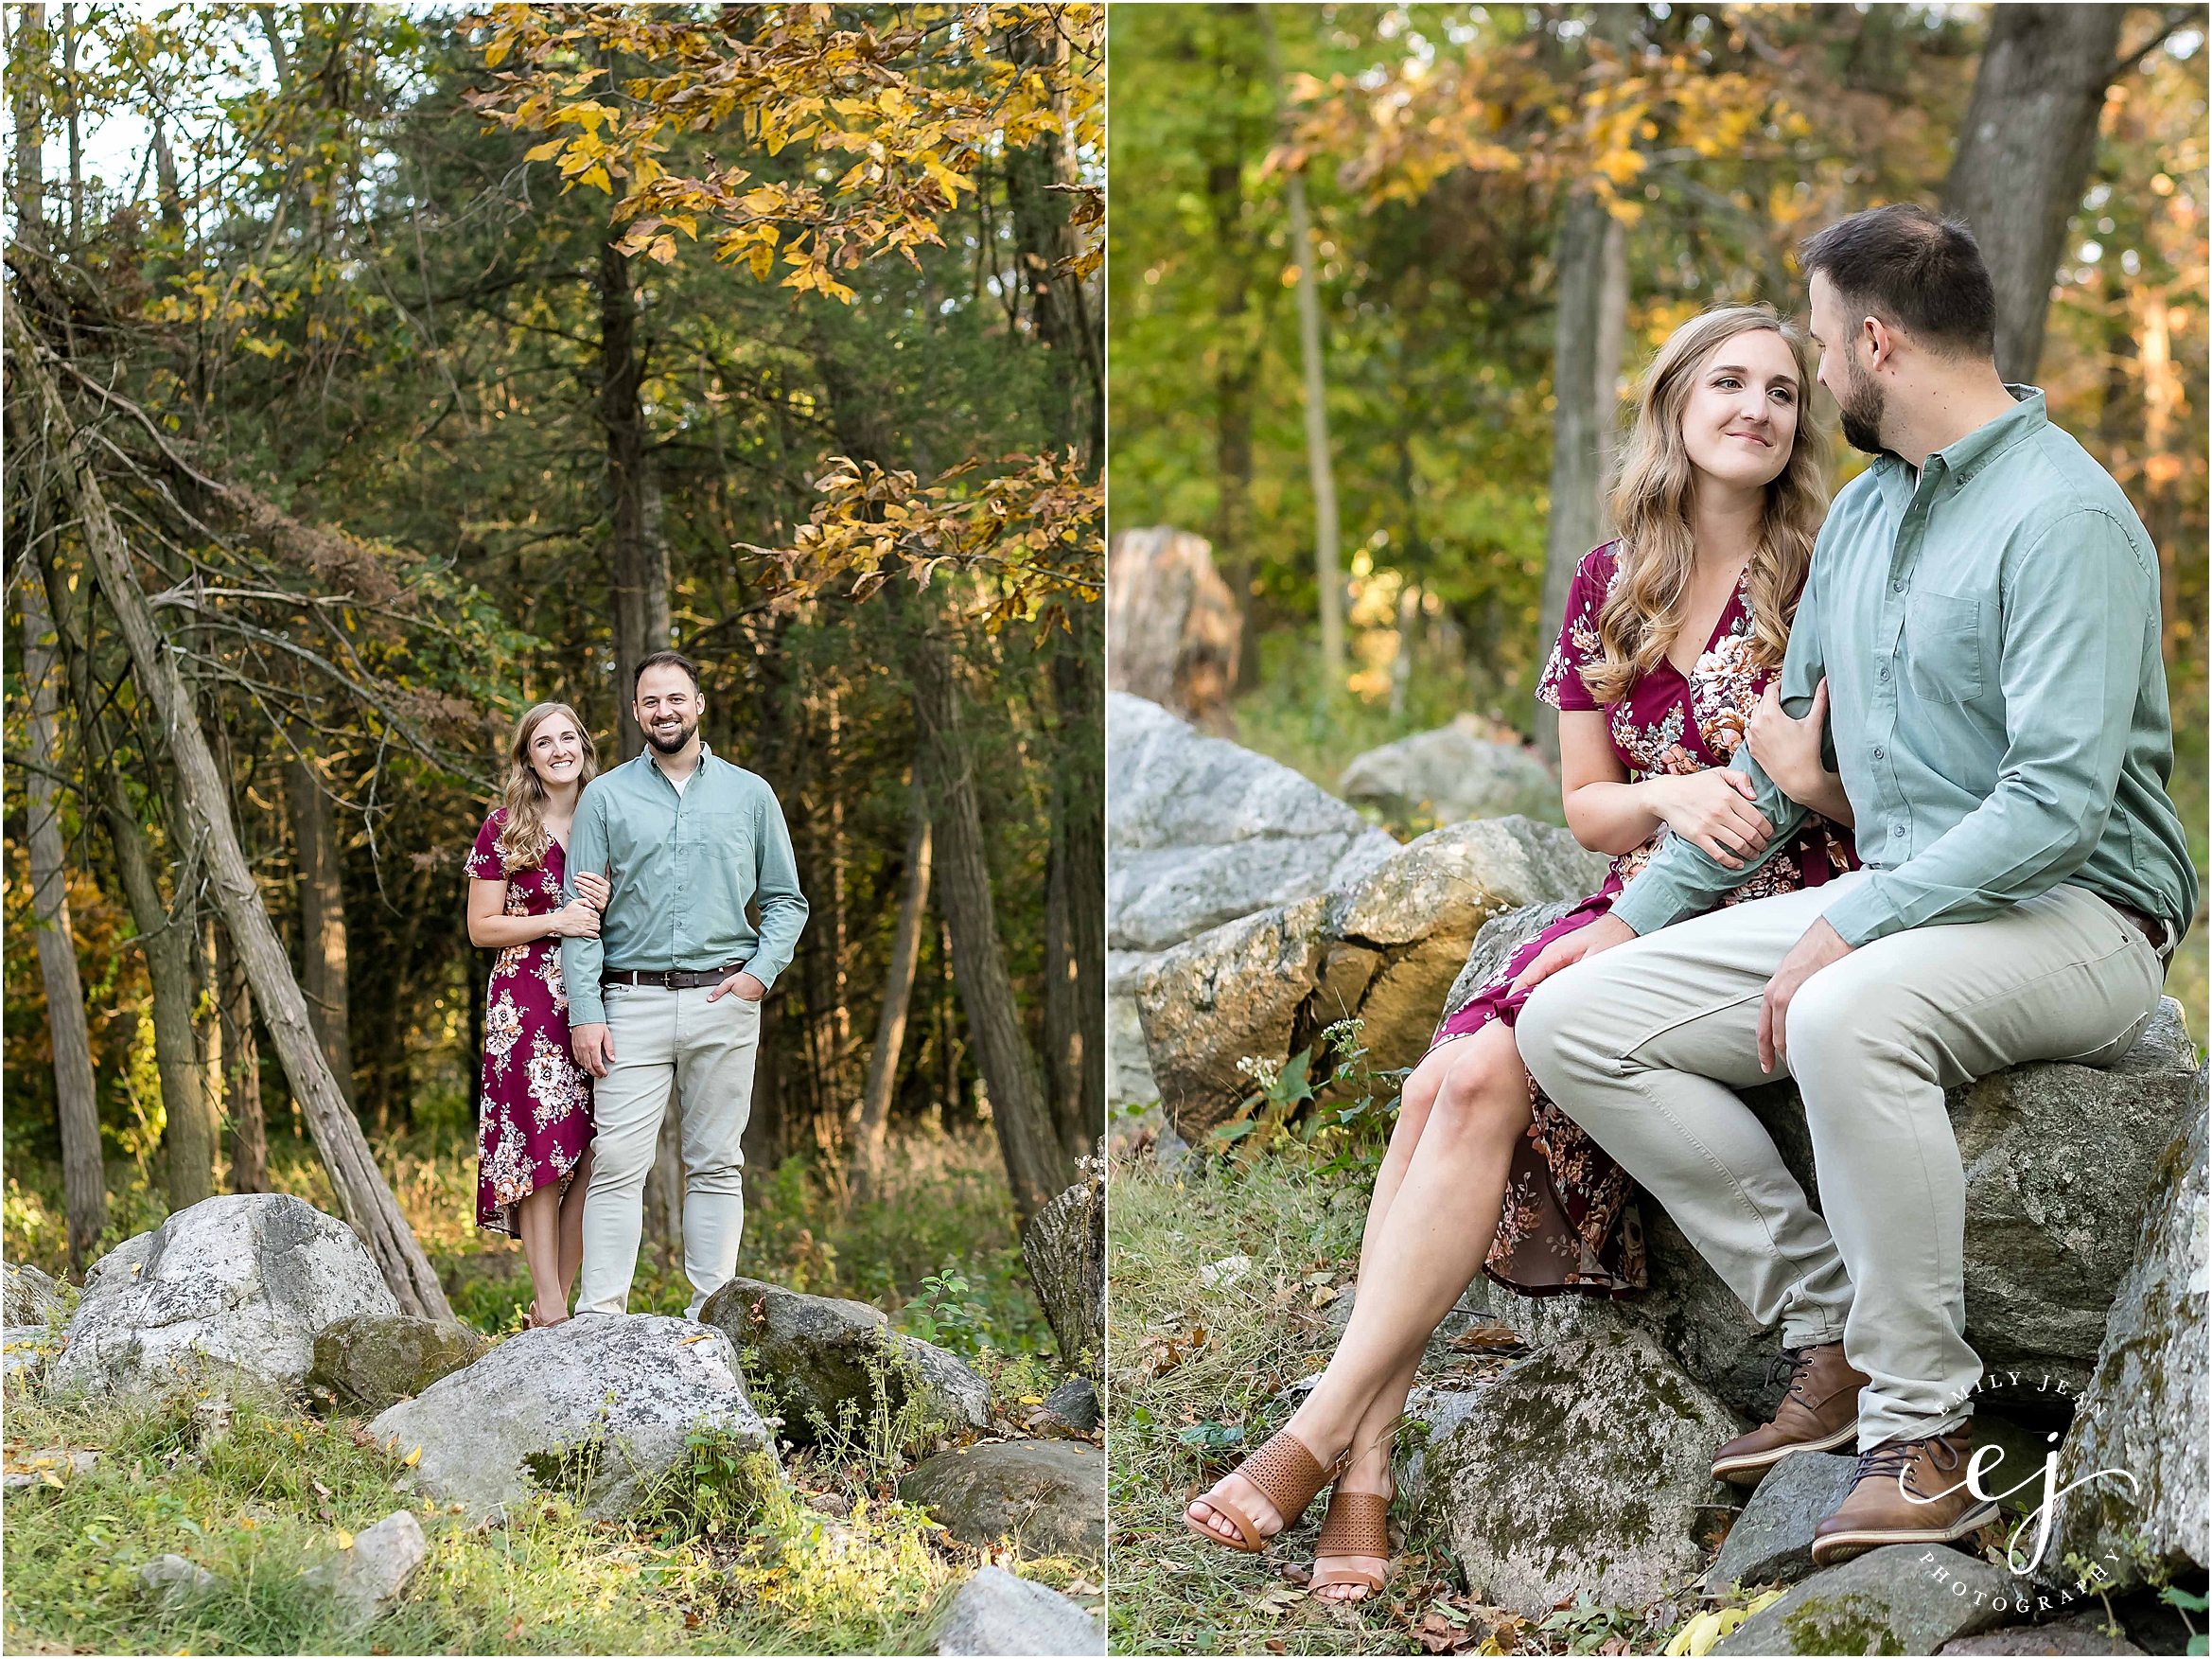 uw arboretum engagement session photographer wisconsin smiling at camera hugging large rocks sitting